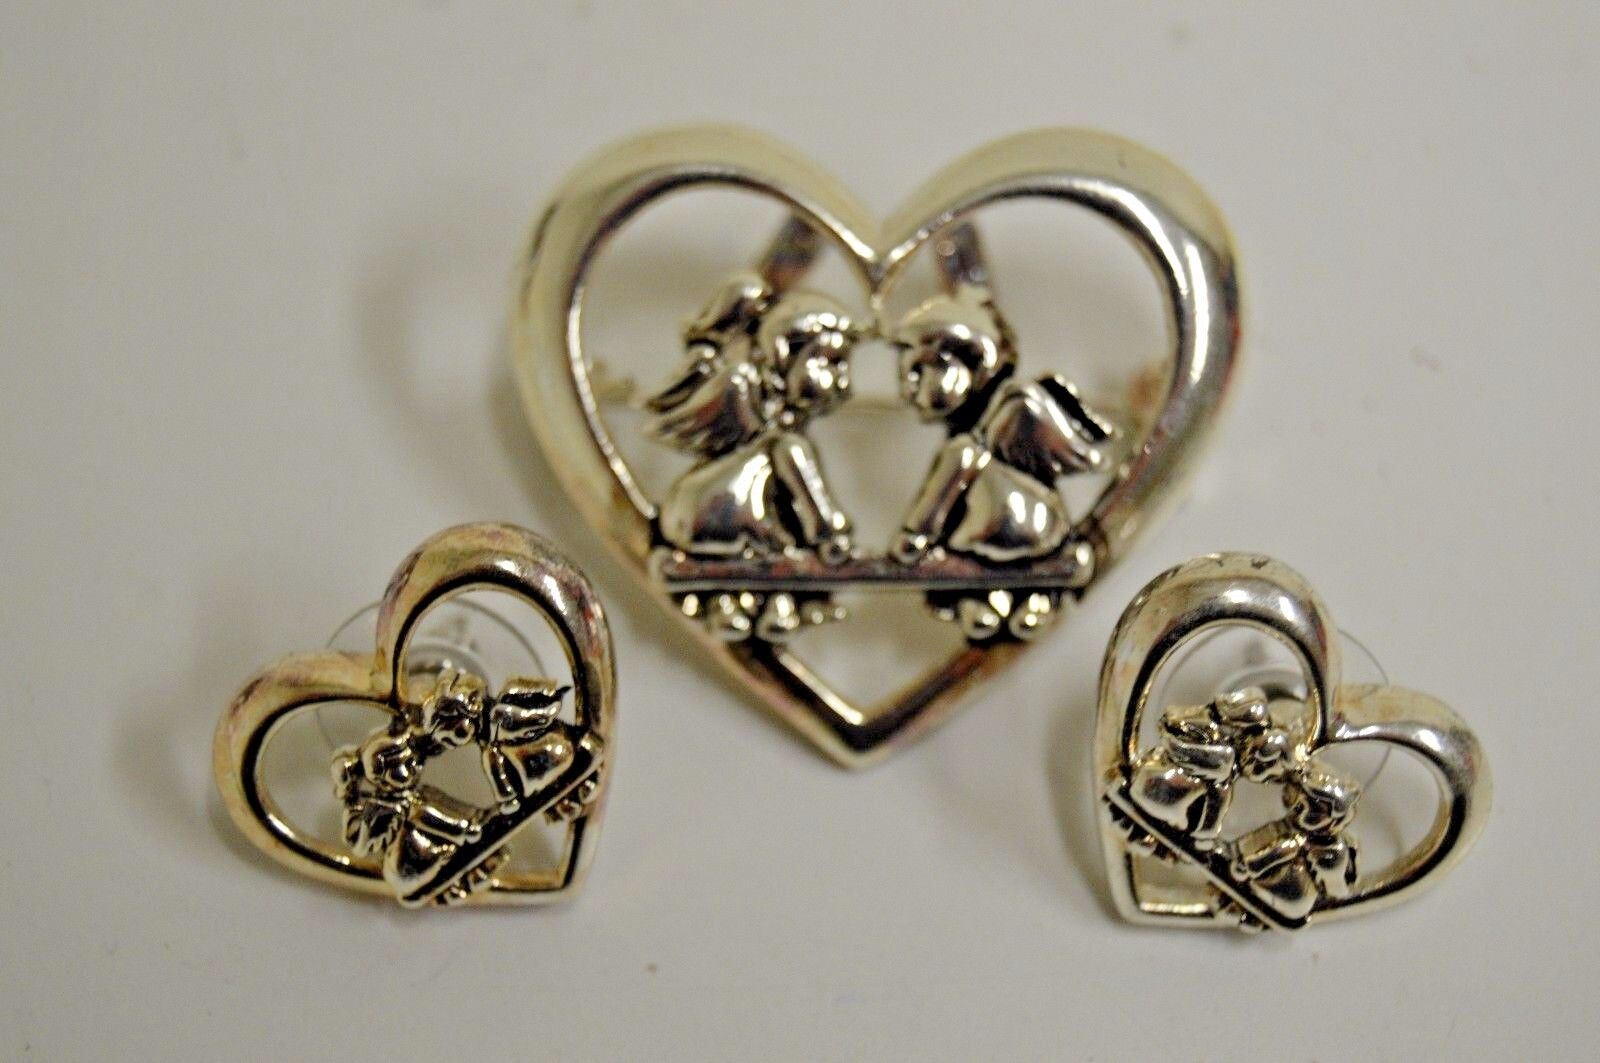 Nice Minty ANGELS Heart Shaped Silver Tone Religious Brooch Pin & Earrings Set